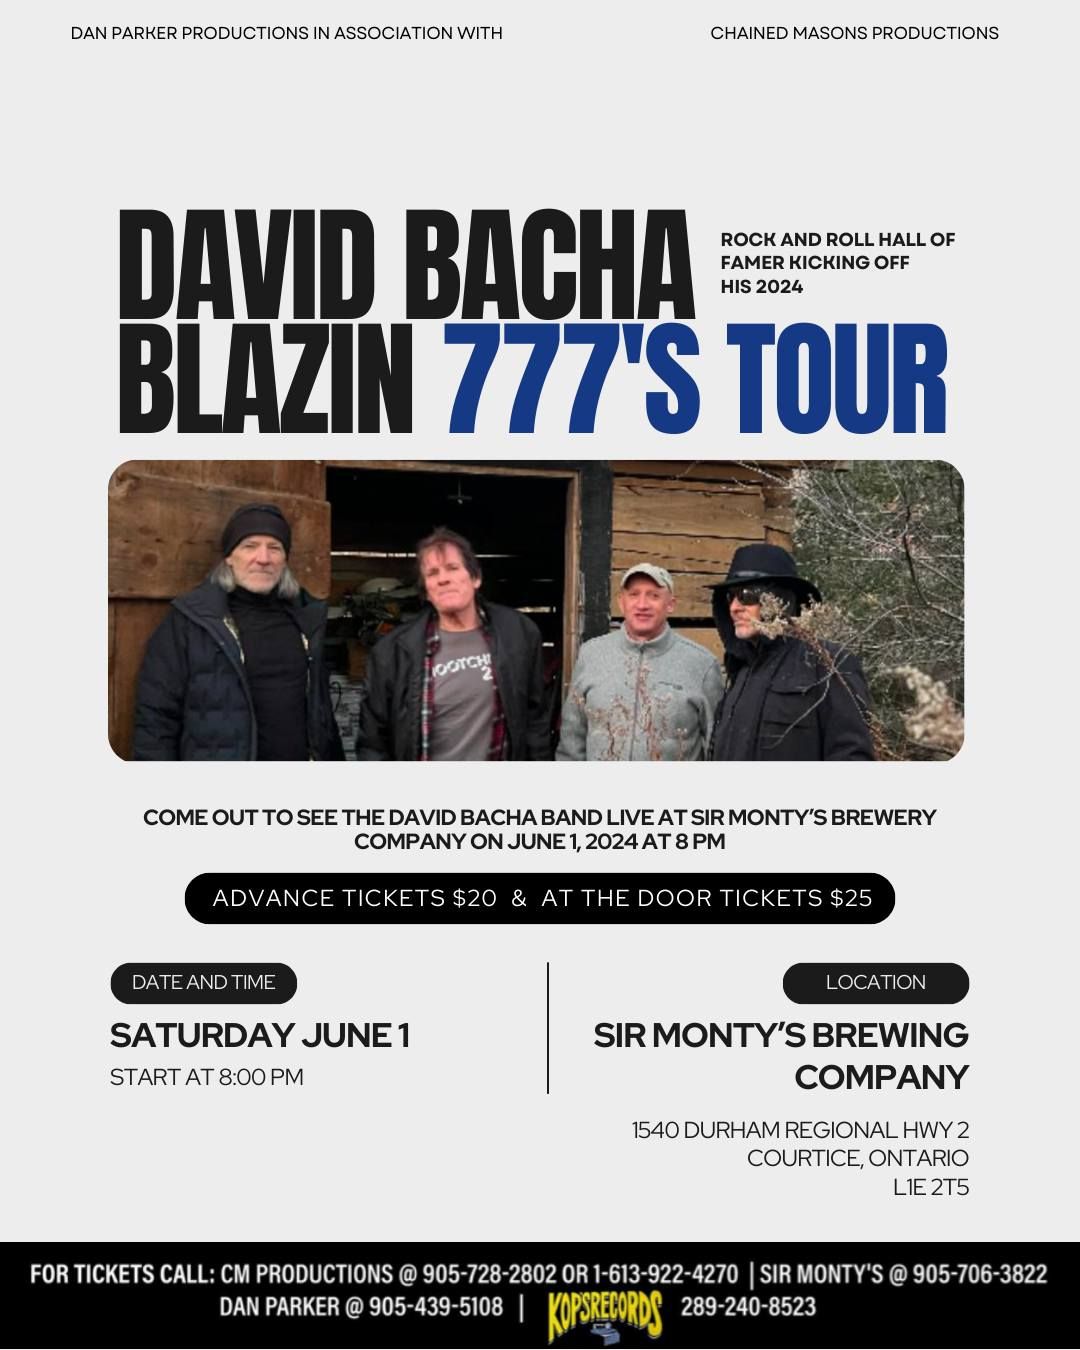 The David Bacha Band